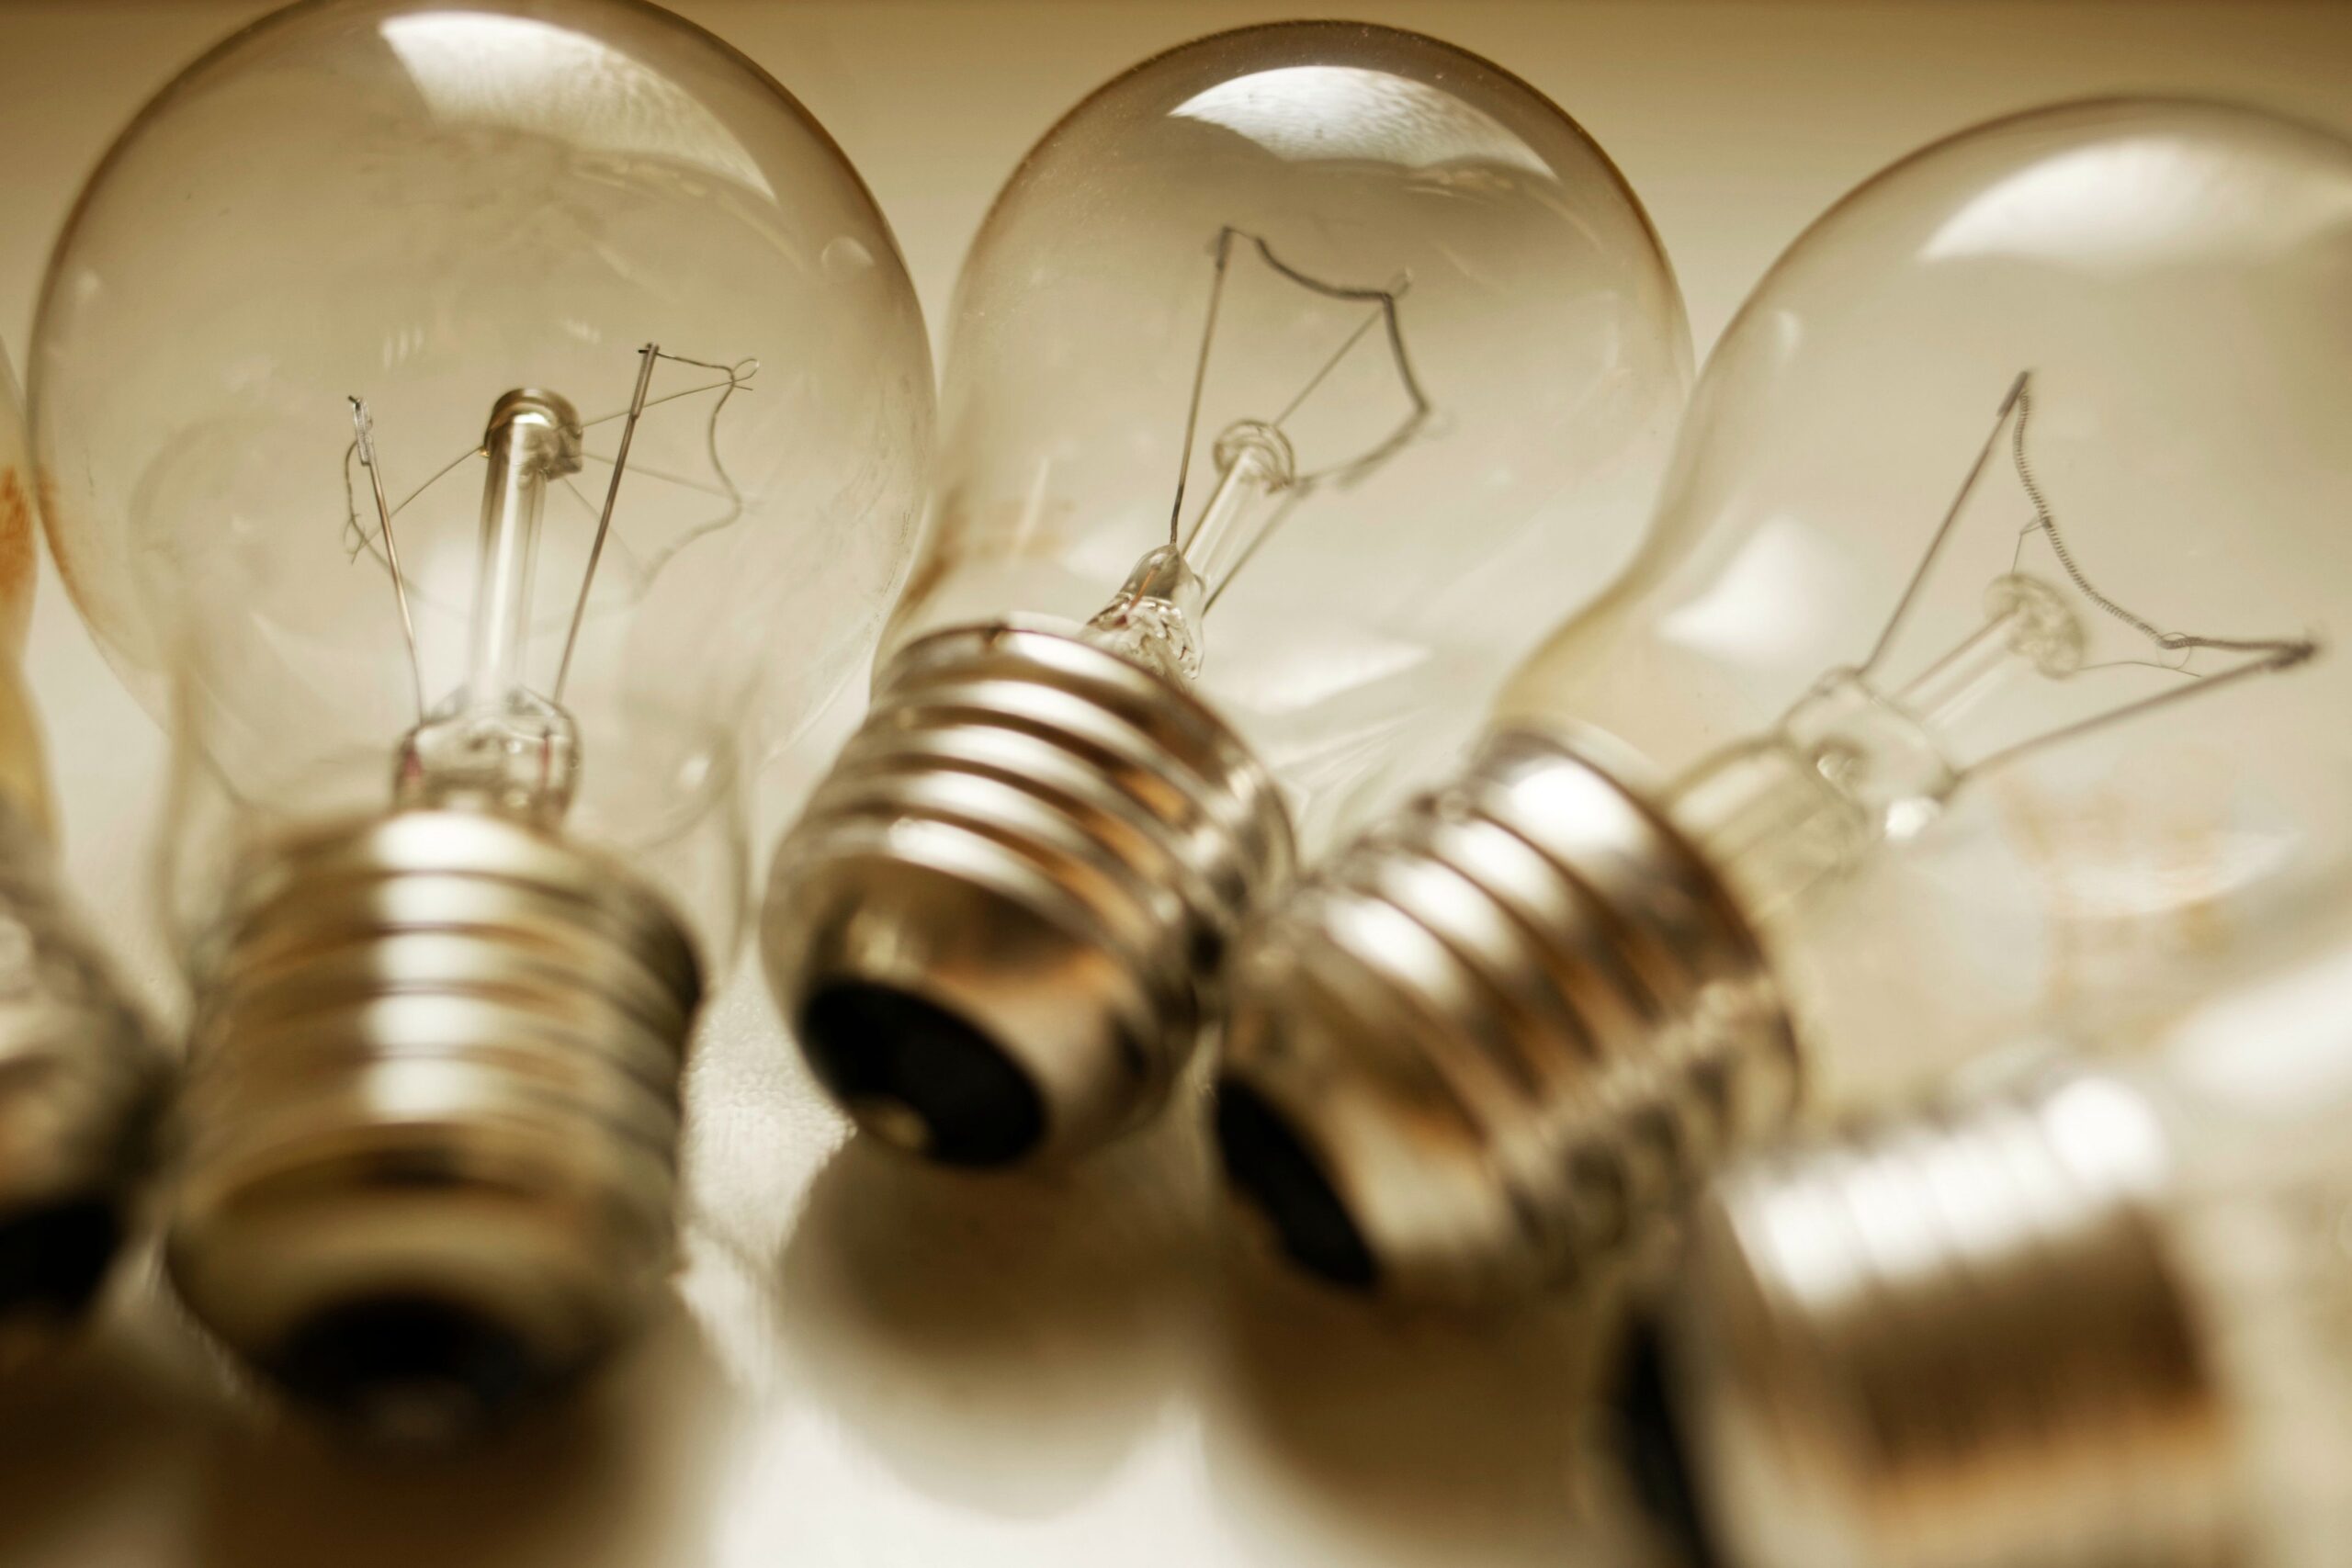 Incandescent light bulb sales have been banned.
(Mandatory Credit:	Predrag Sepelj/Adobe Stock)...